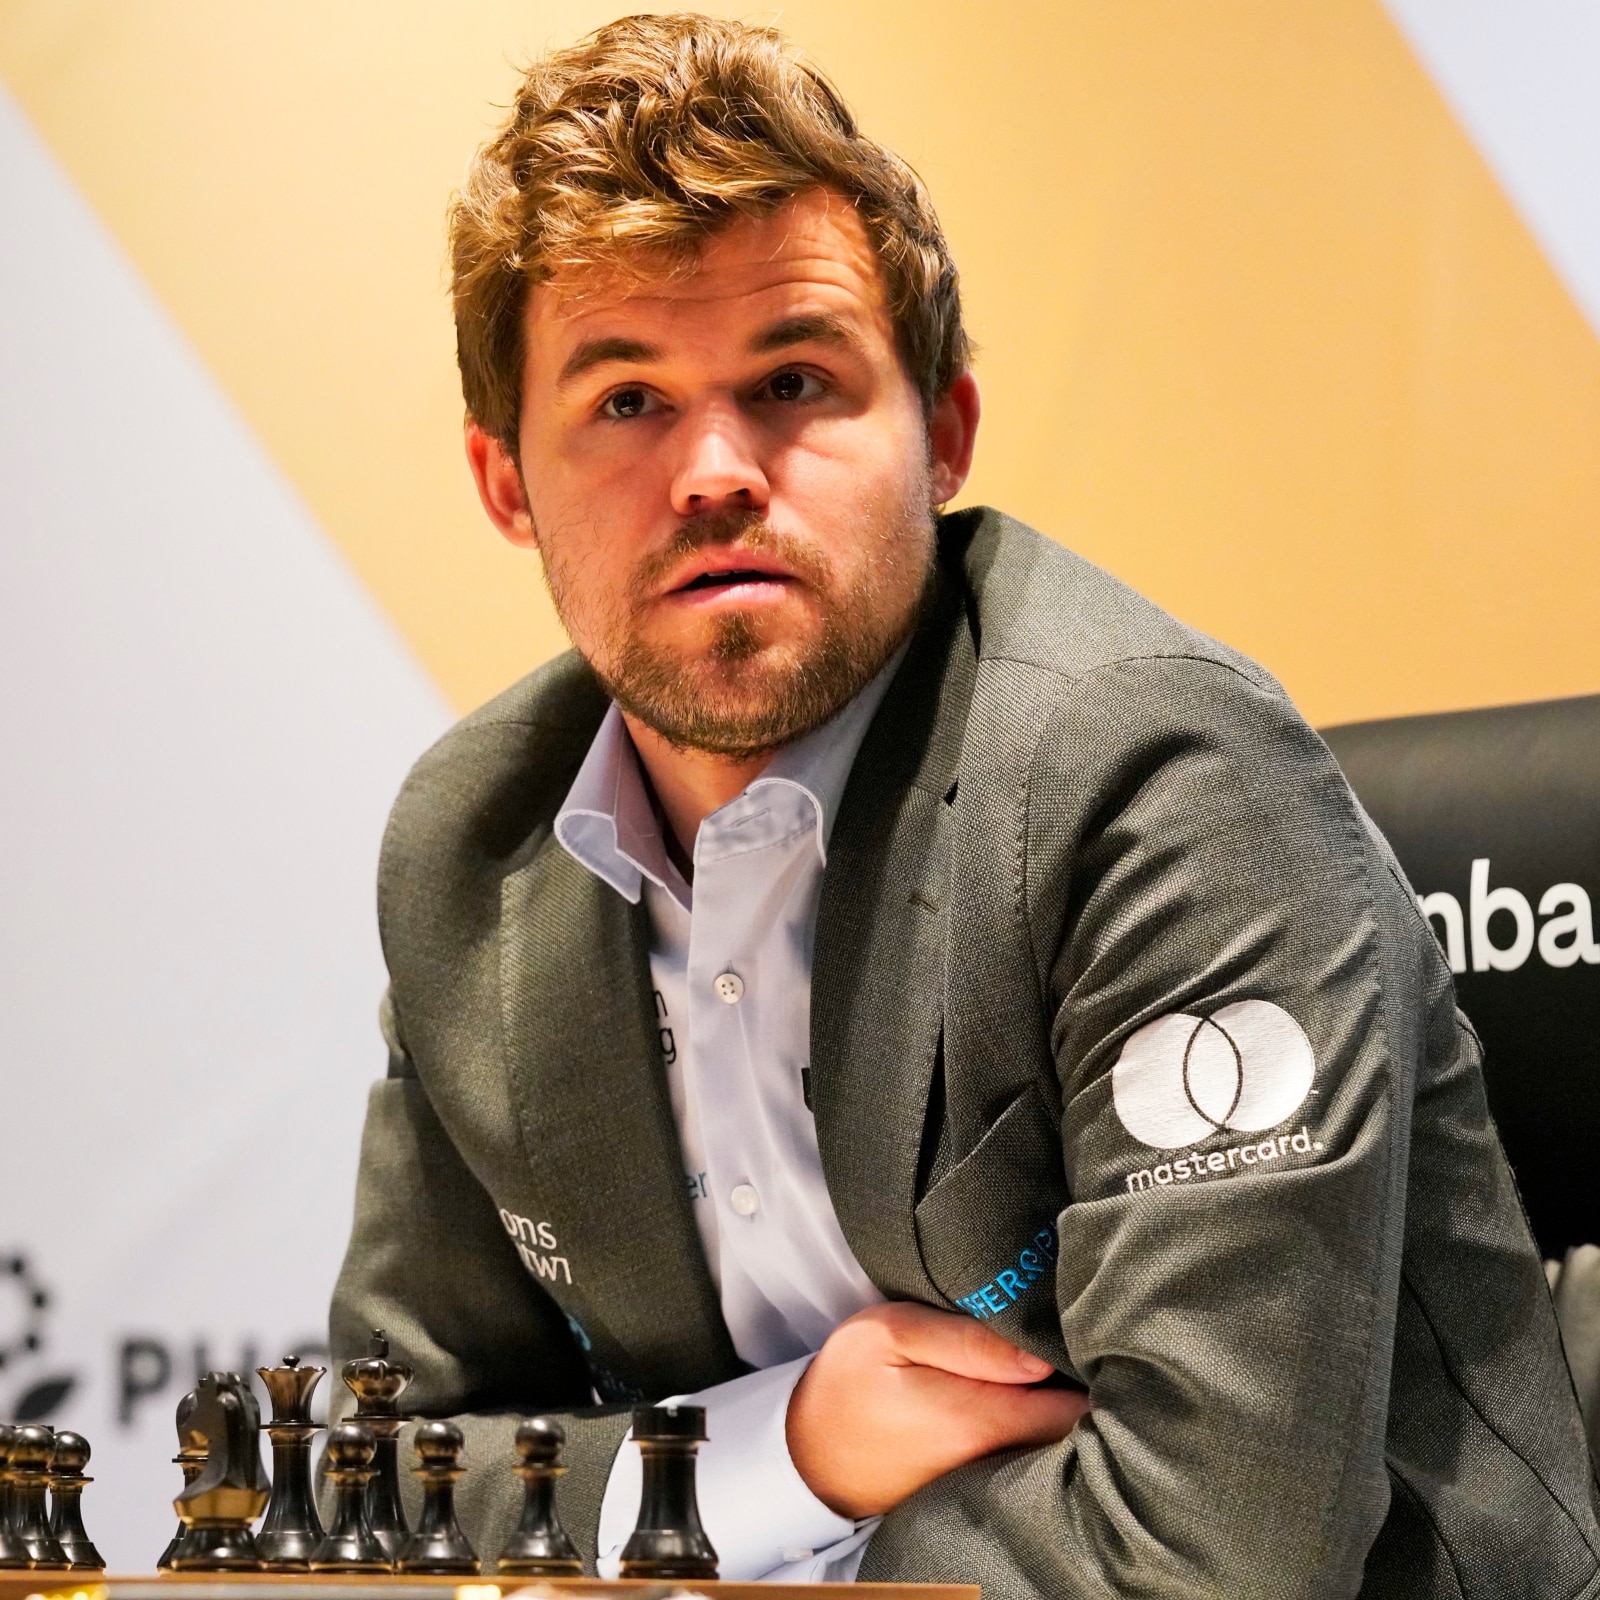 World Chess Championship: Magnus Carlsen retains title – DW – 11/28/2018